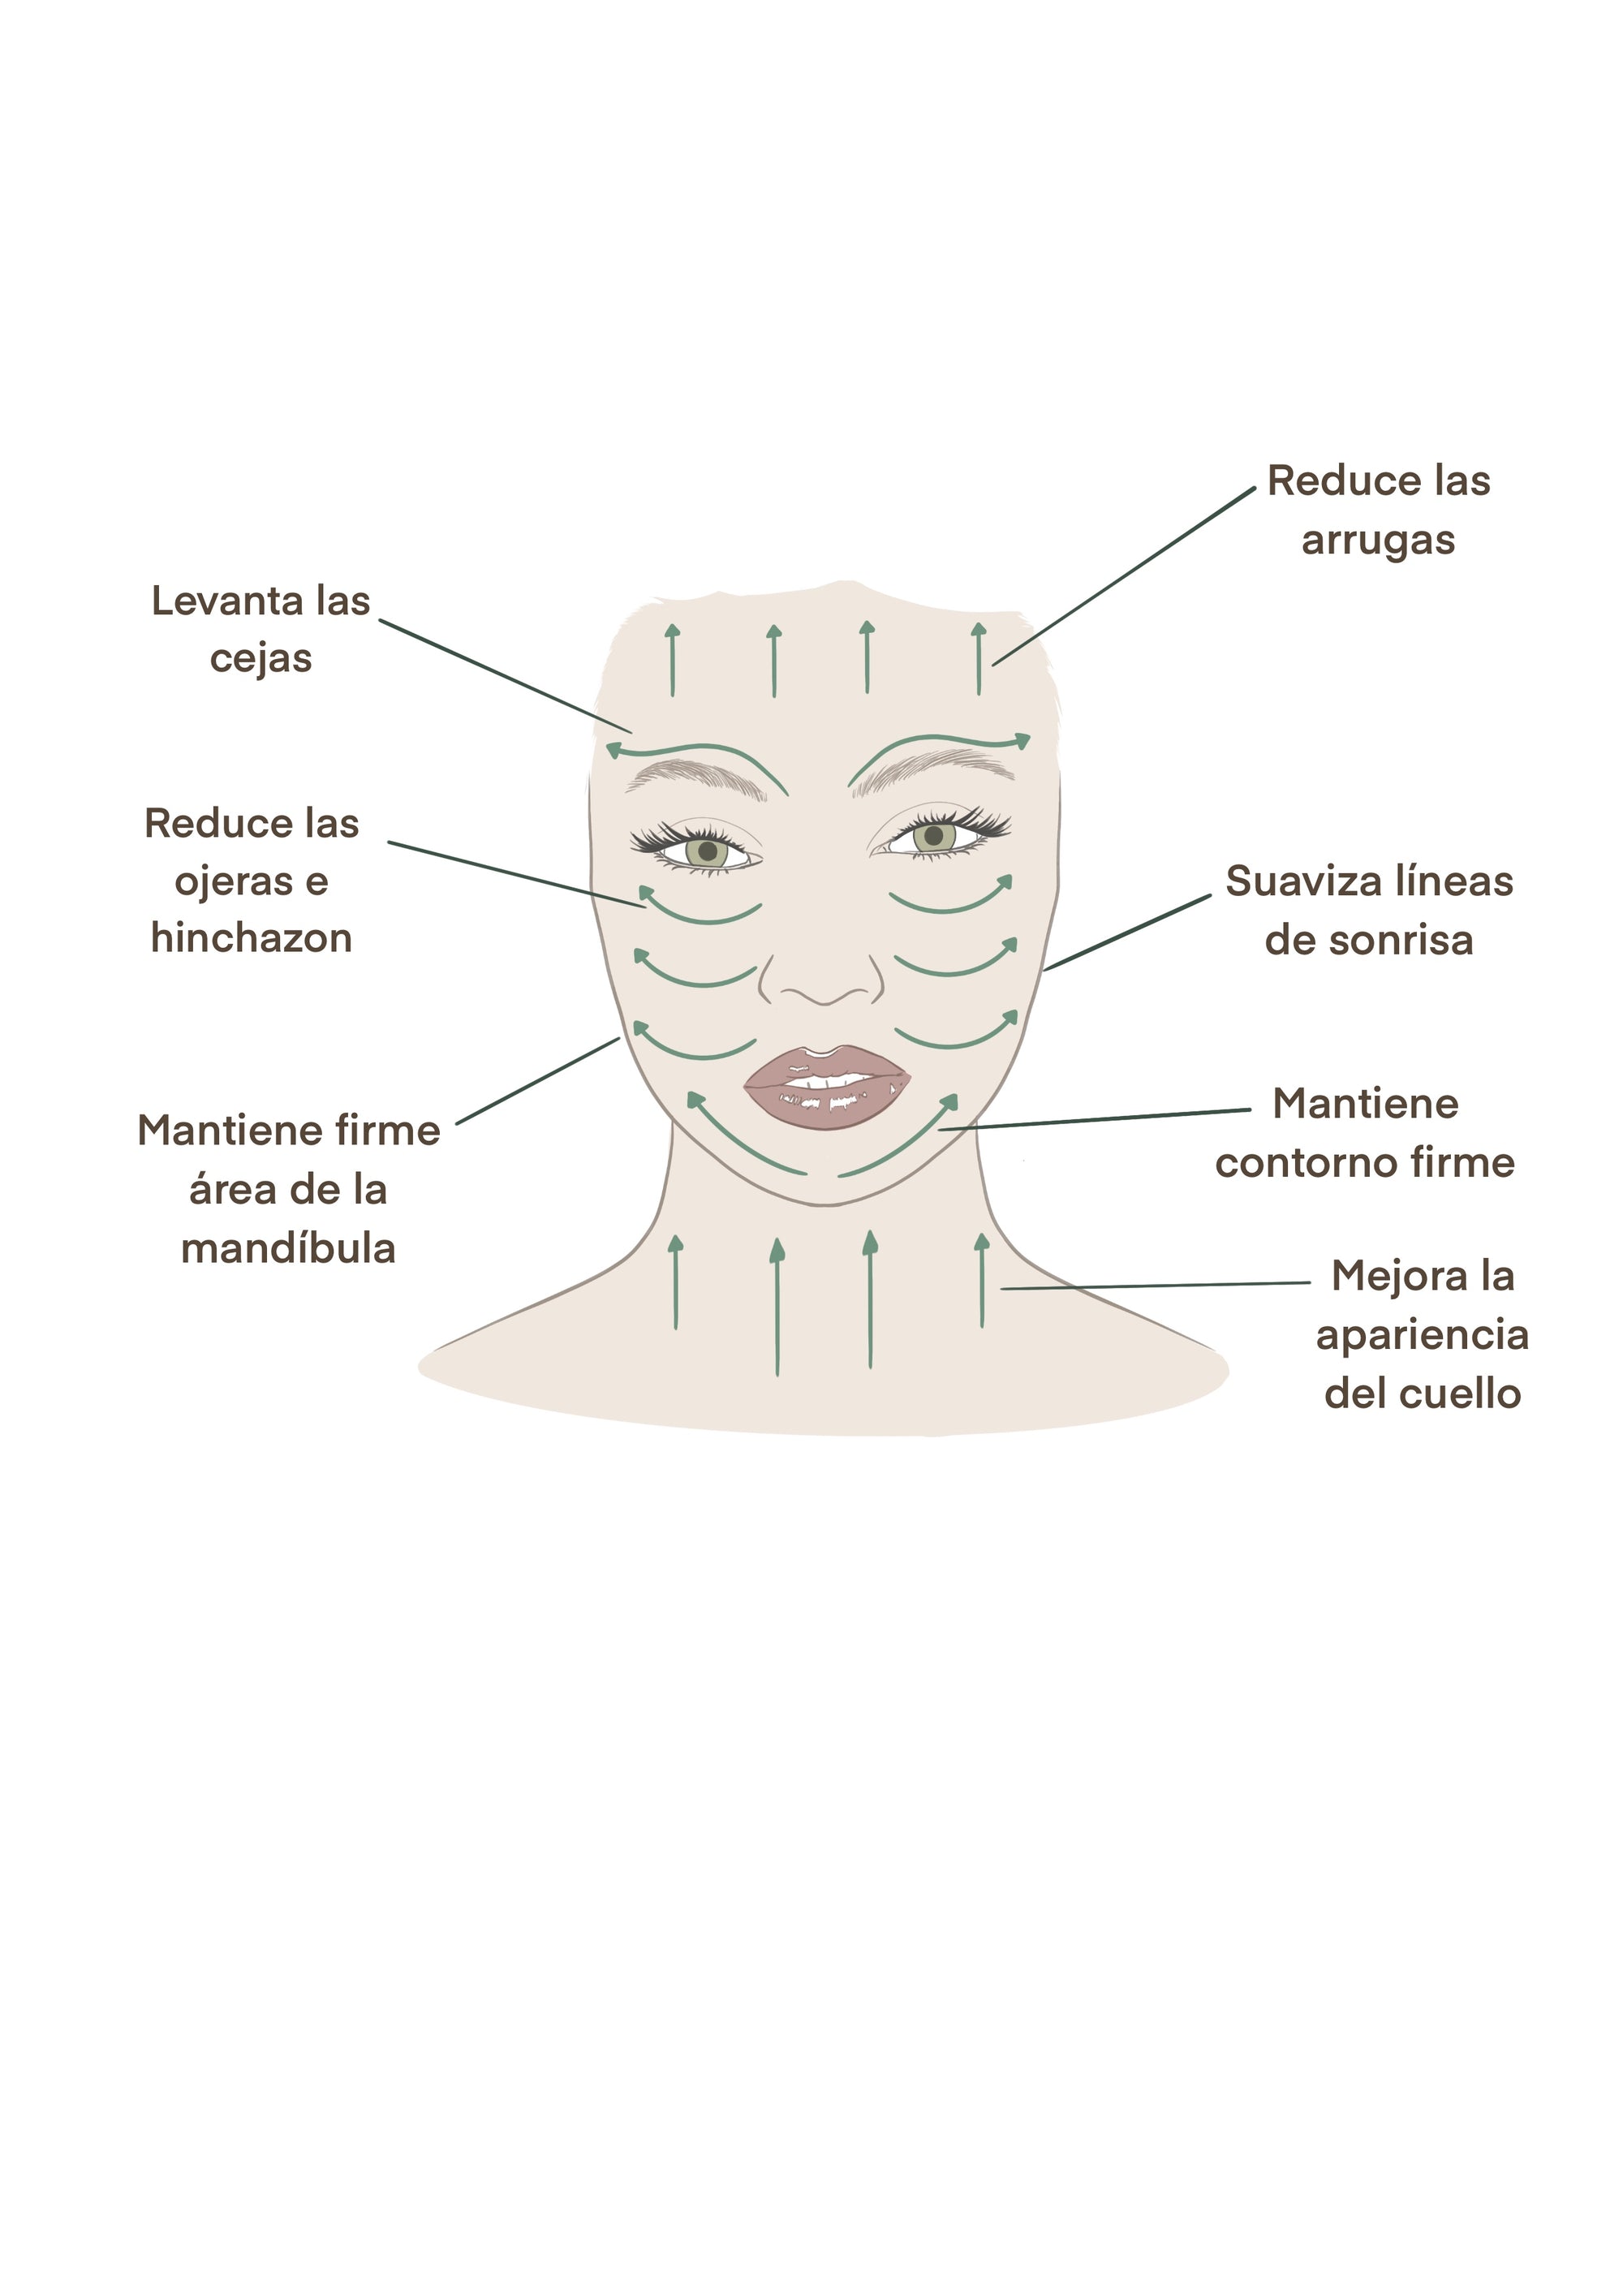 Gua Sha Facial Massage Stone